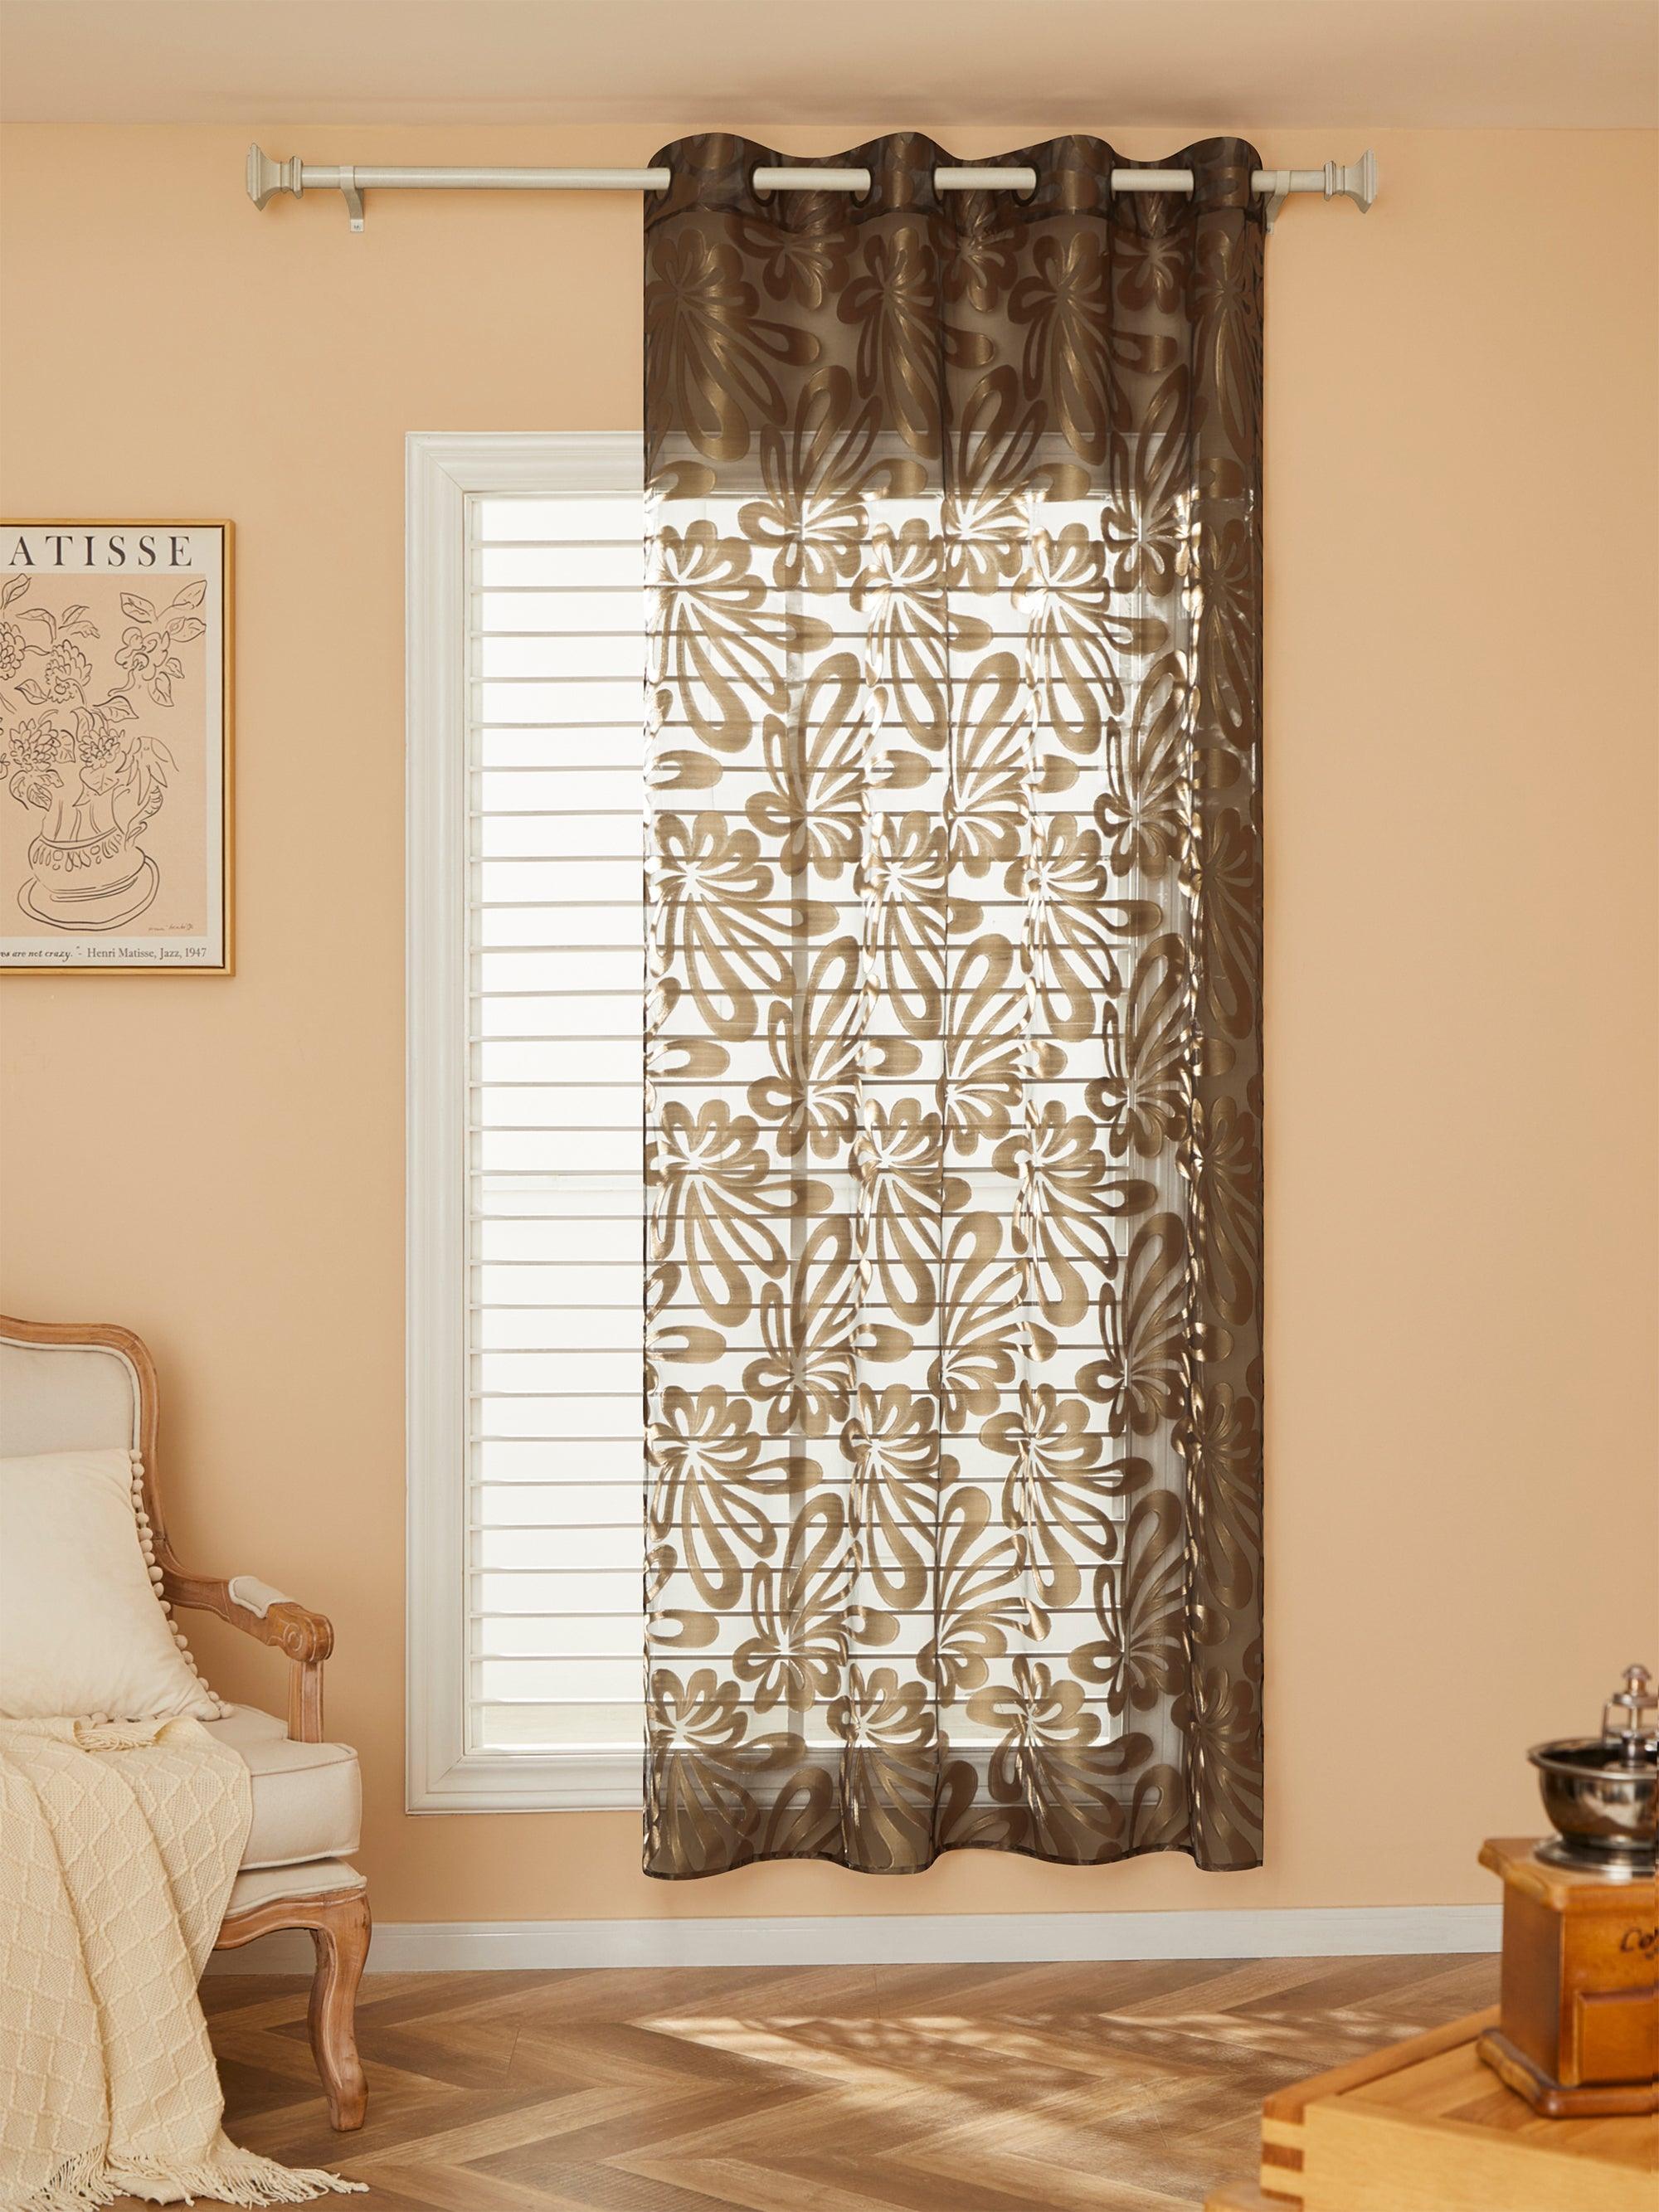 Topfinel Floral Sheer Curtains for Living Room，Semi White Sheer Curtains Panels - Topfinel